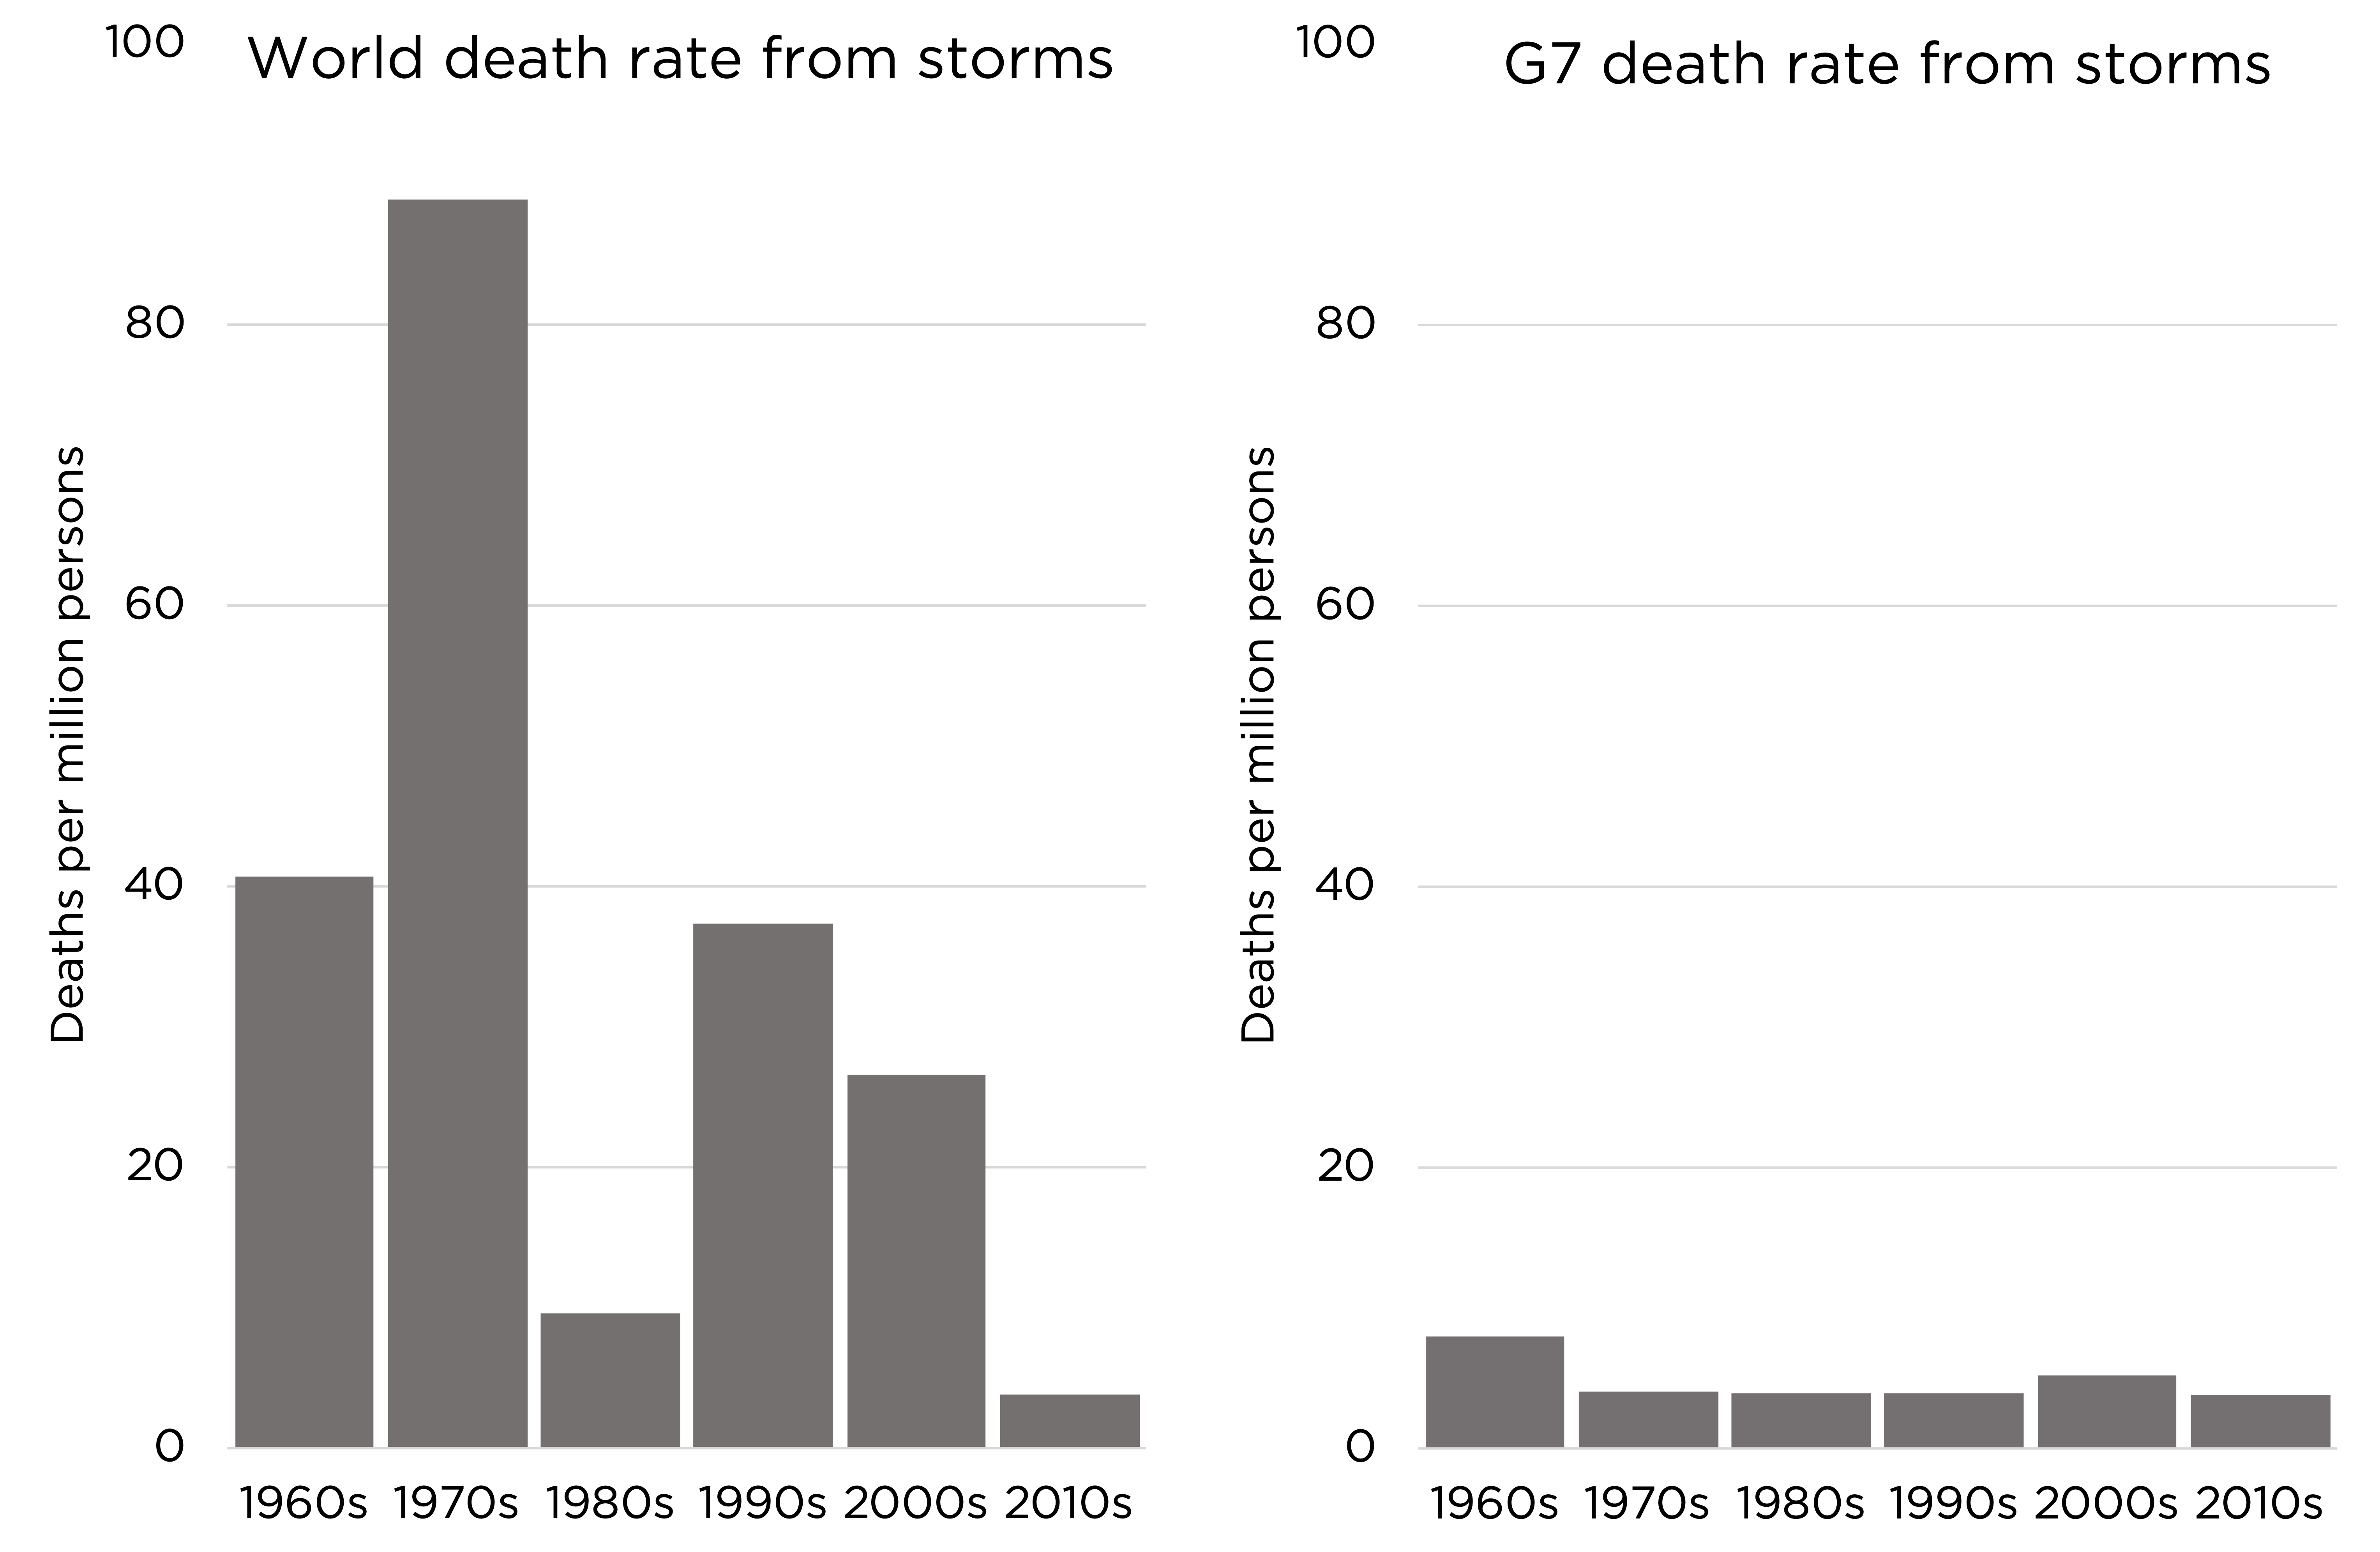 Storm deaths